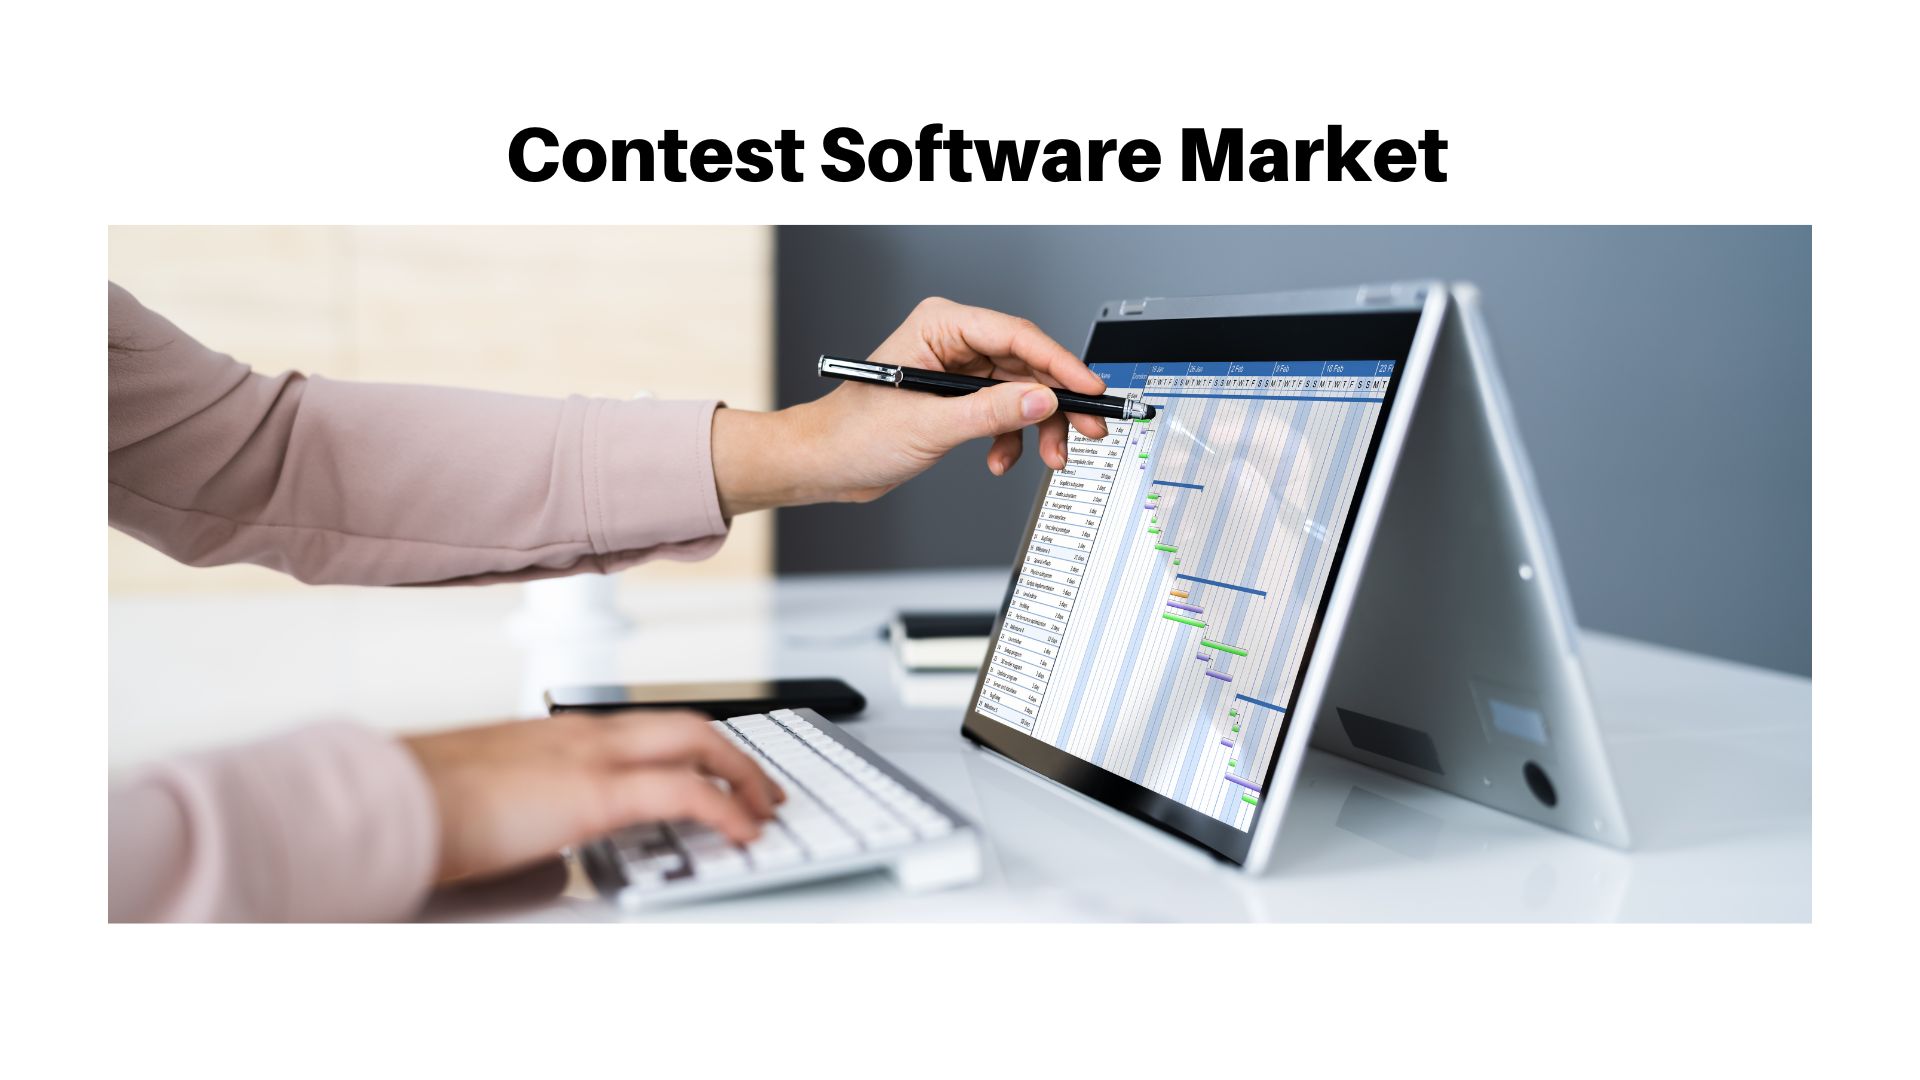 Contest Software Market Size Will Reach USD 4.35 Billion By 2032